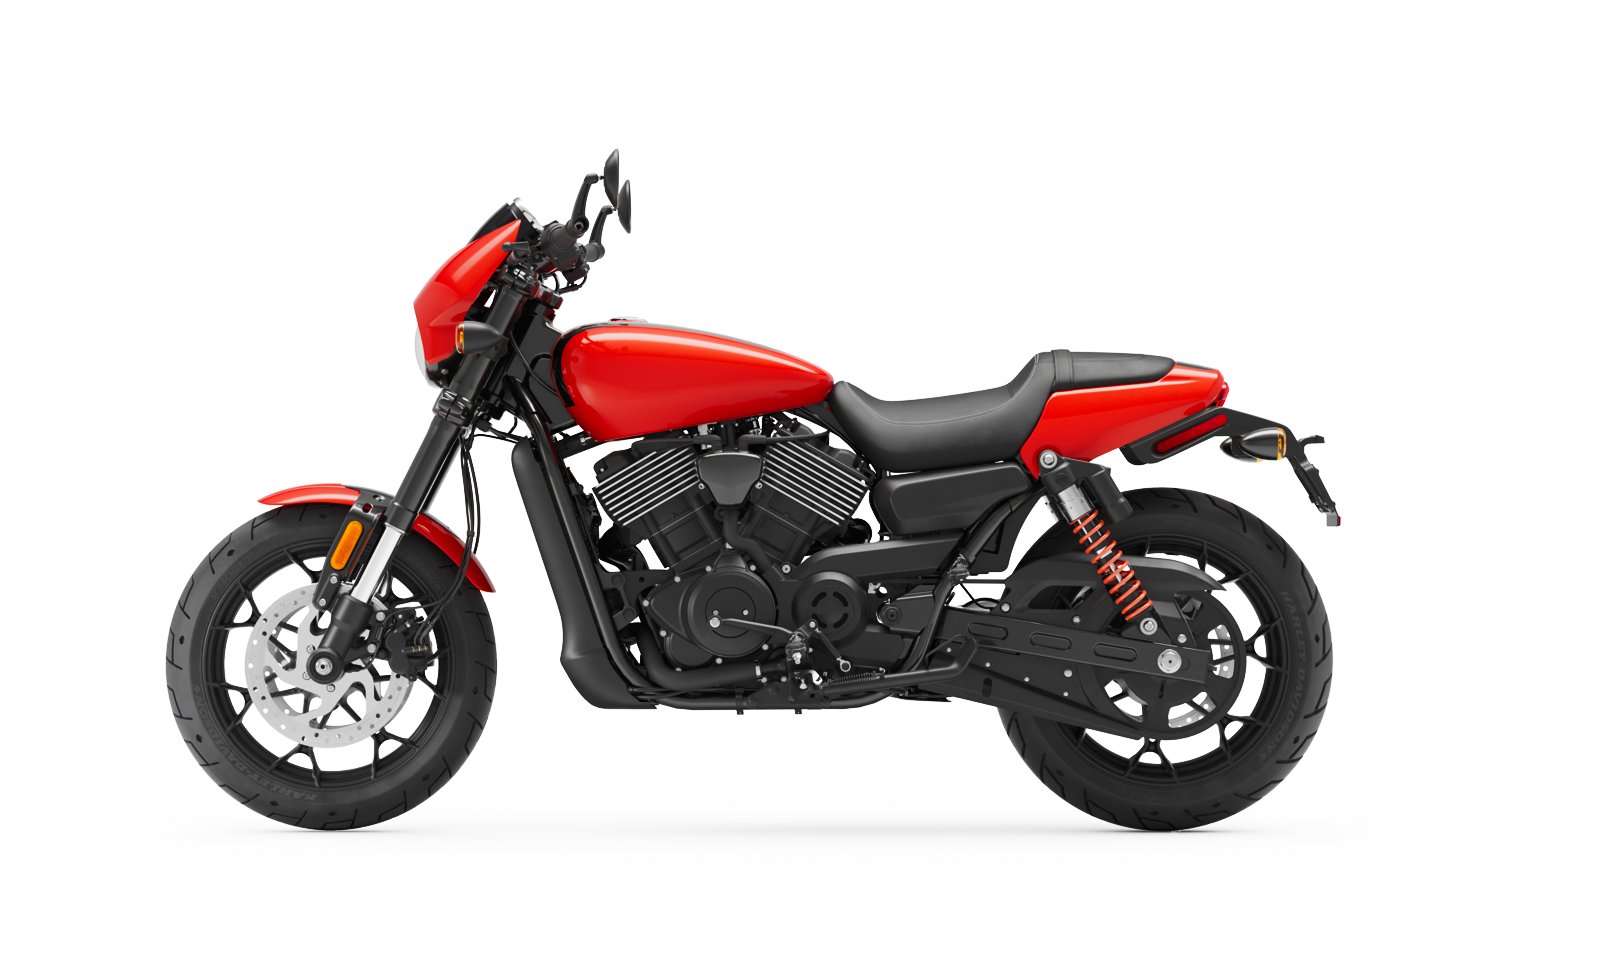 2020 Street Rod Motorcycle Harley Davidson United Kingdom